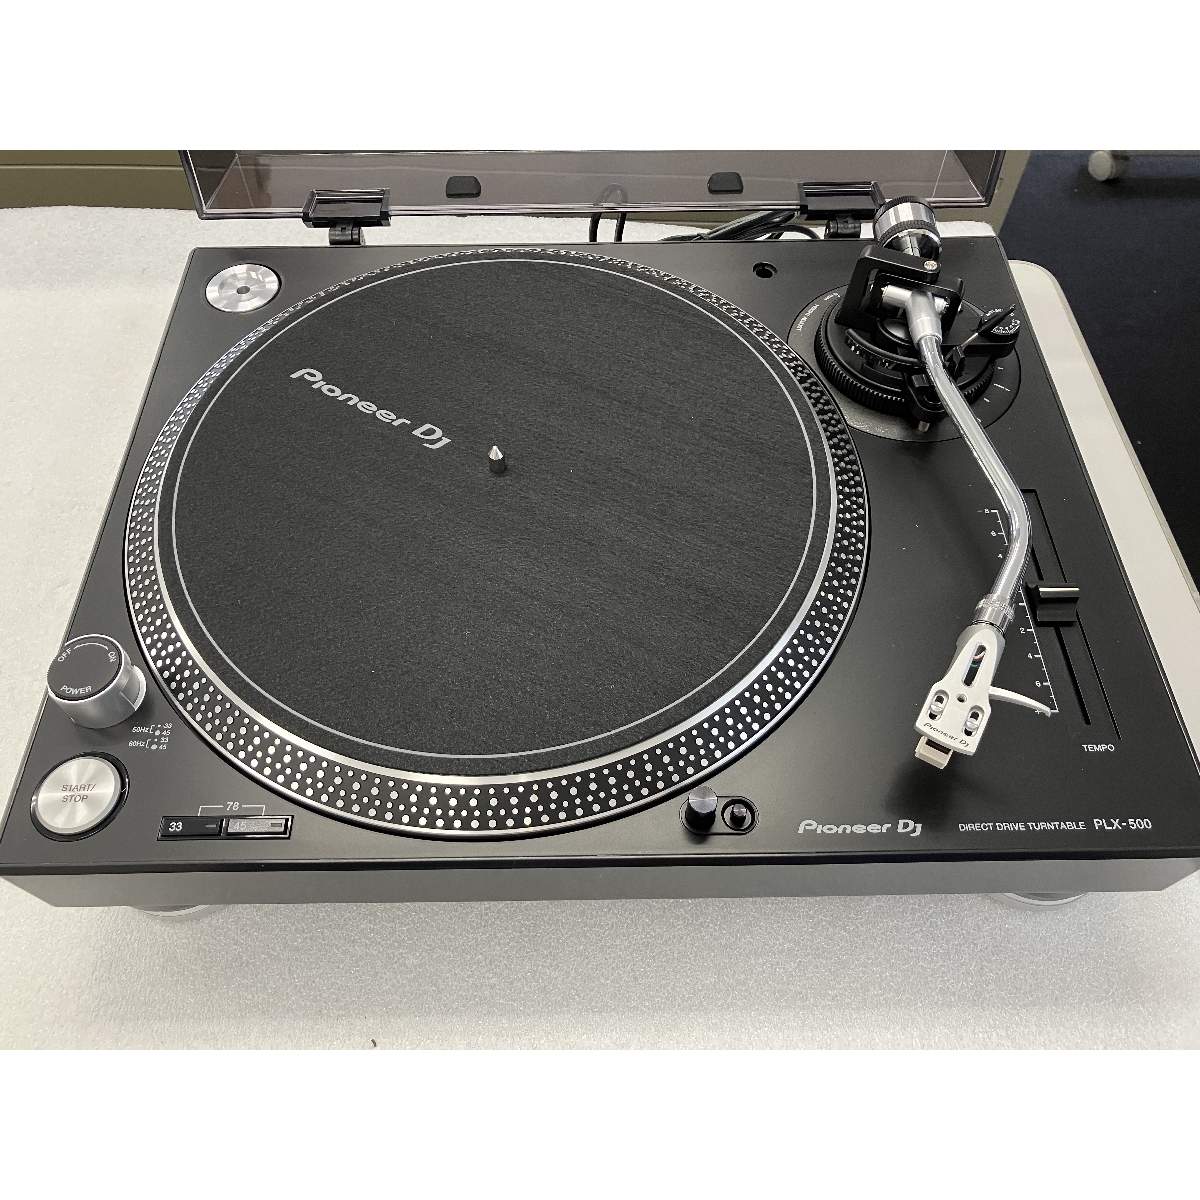 Pioneer Pioneer PLX-500 turntable sound equipment audio Junk S8956305